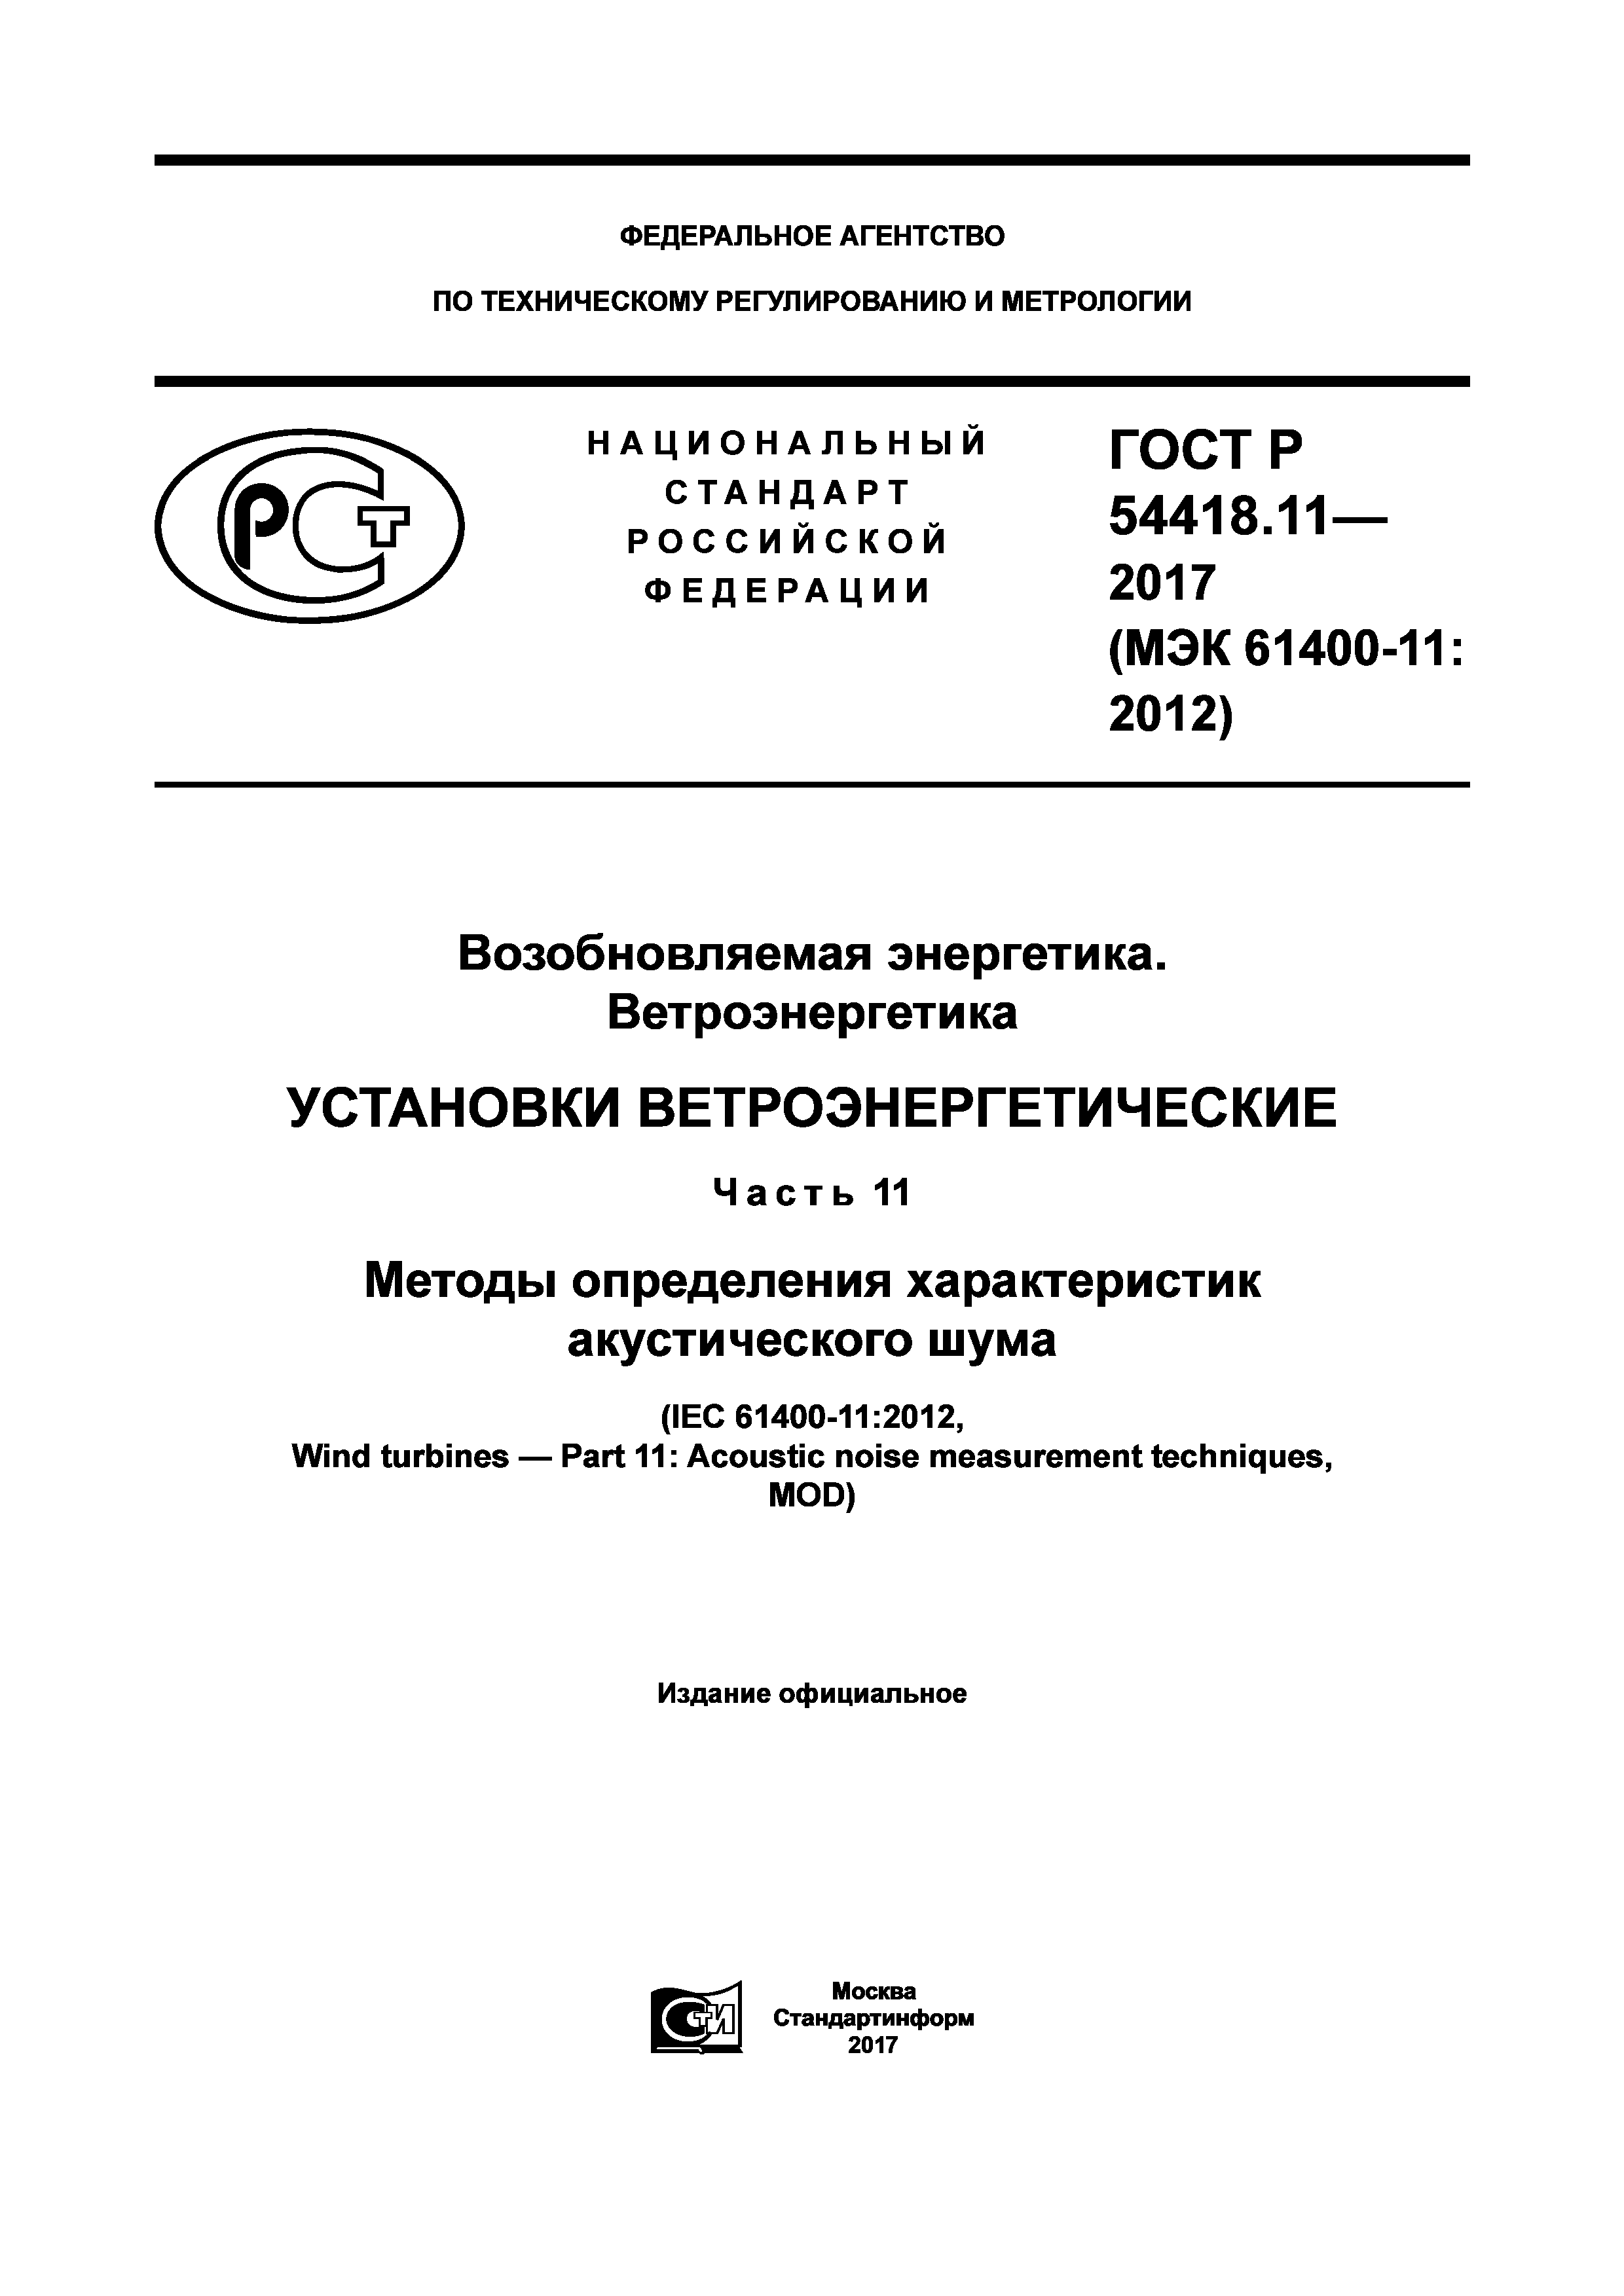 ГОСТ Р 54418.11-2017